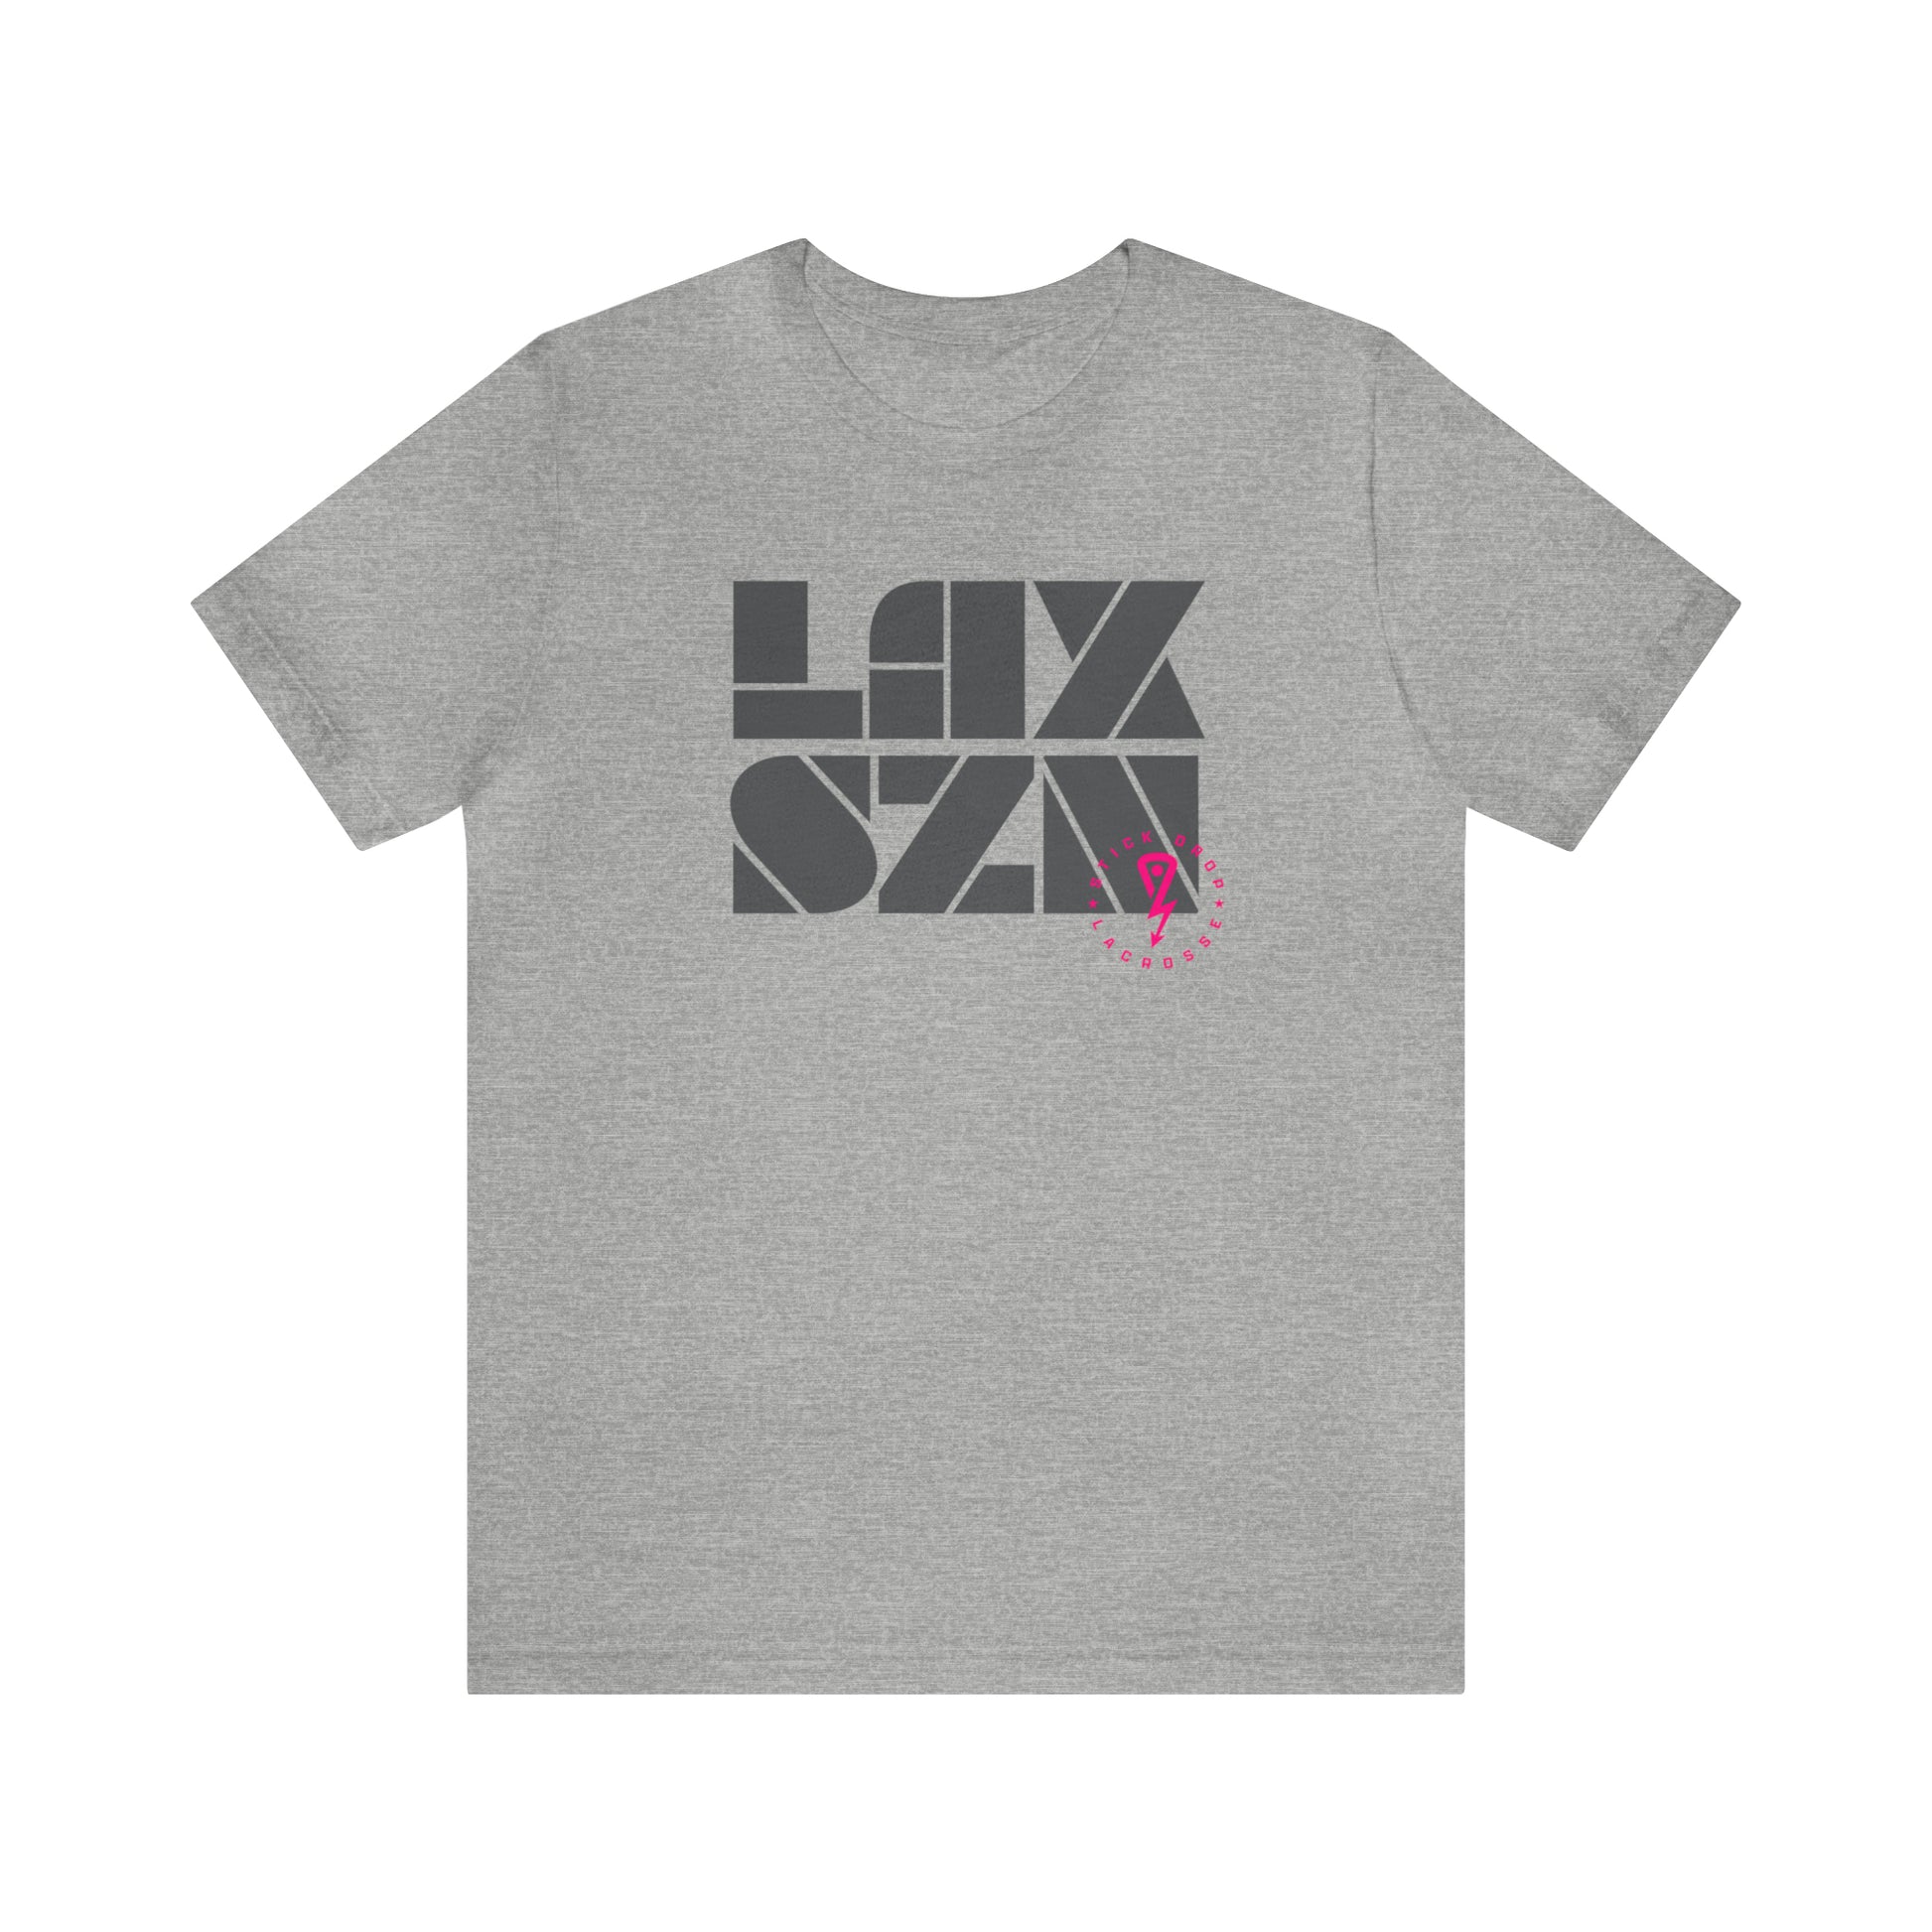 Gray on Gray Lax Season T-shirt with hot pink SDL logo